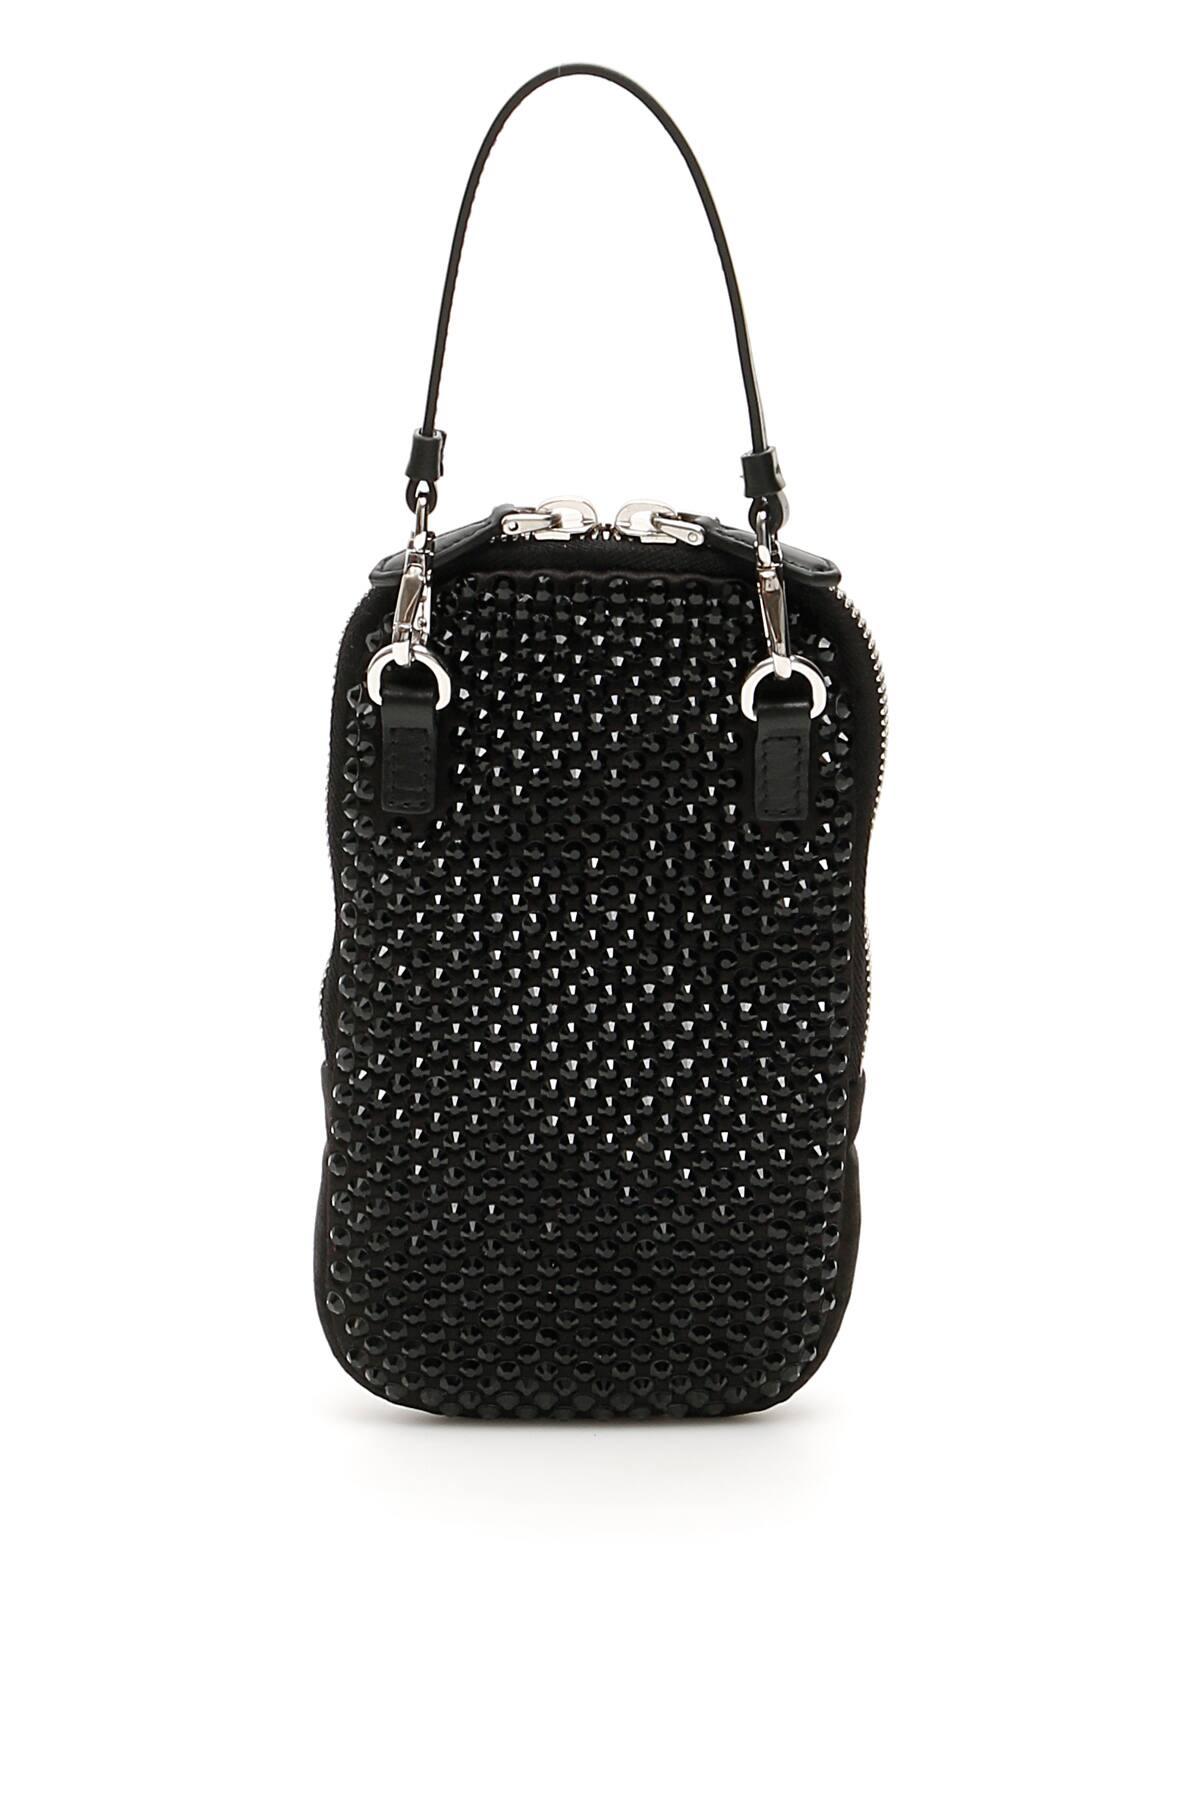 Prada Crystal Handbag Options — SLK Style